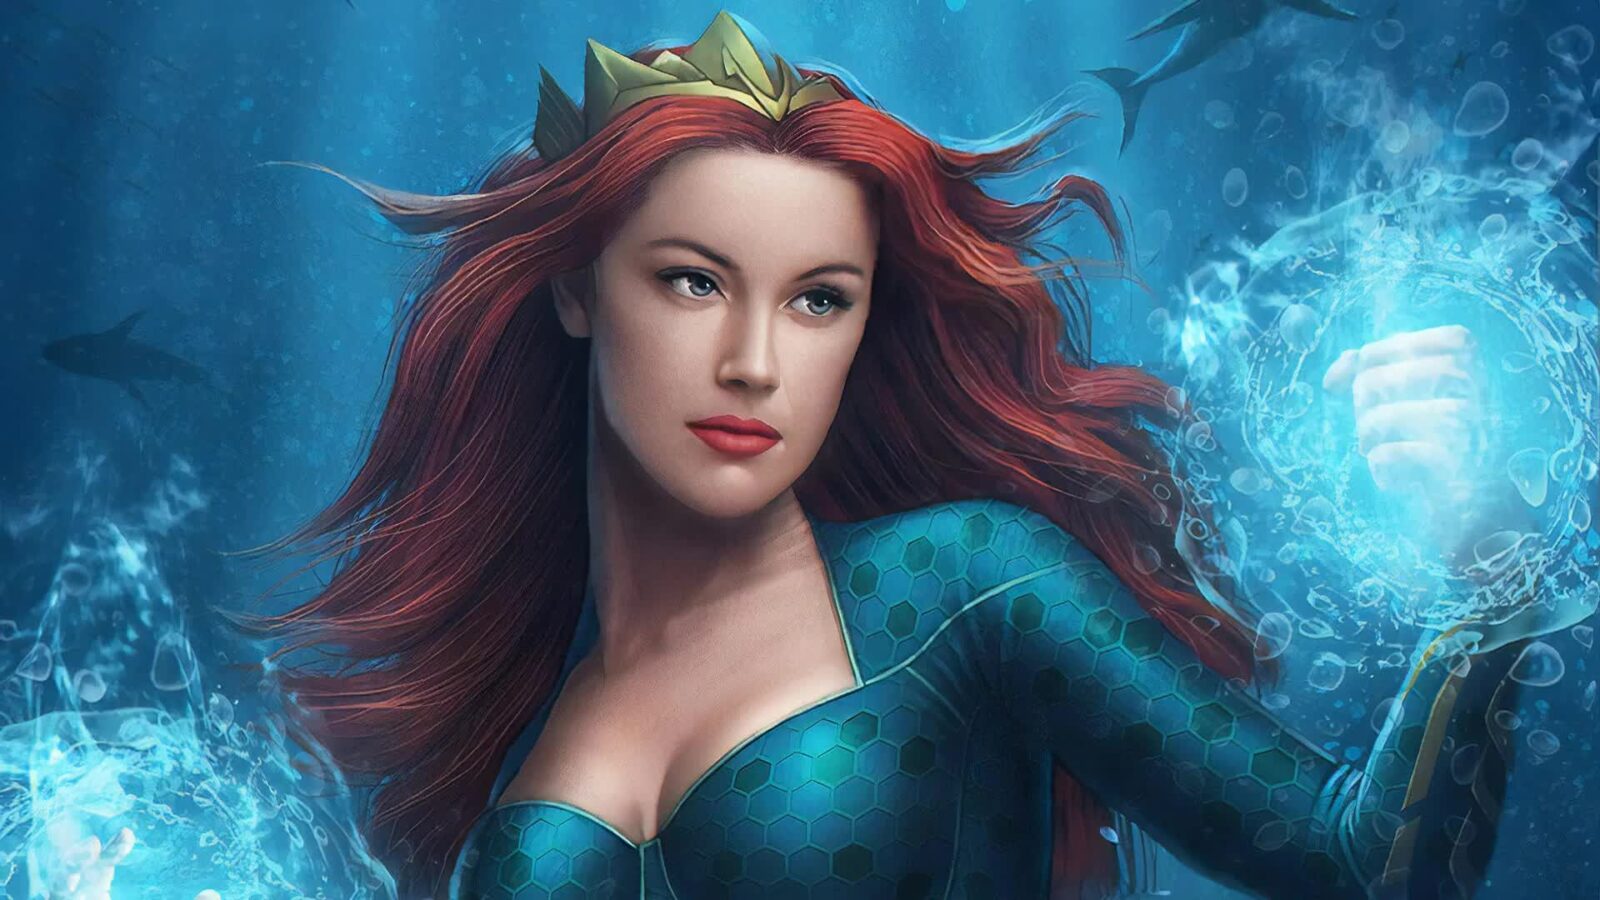 LiveWallpapers4Free.com | Beautiful Mera Aquaman Movie Heroes - Free Live Wallpaper